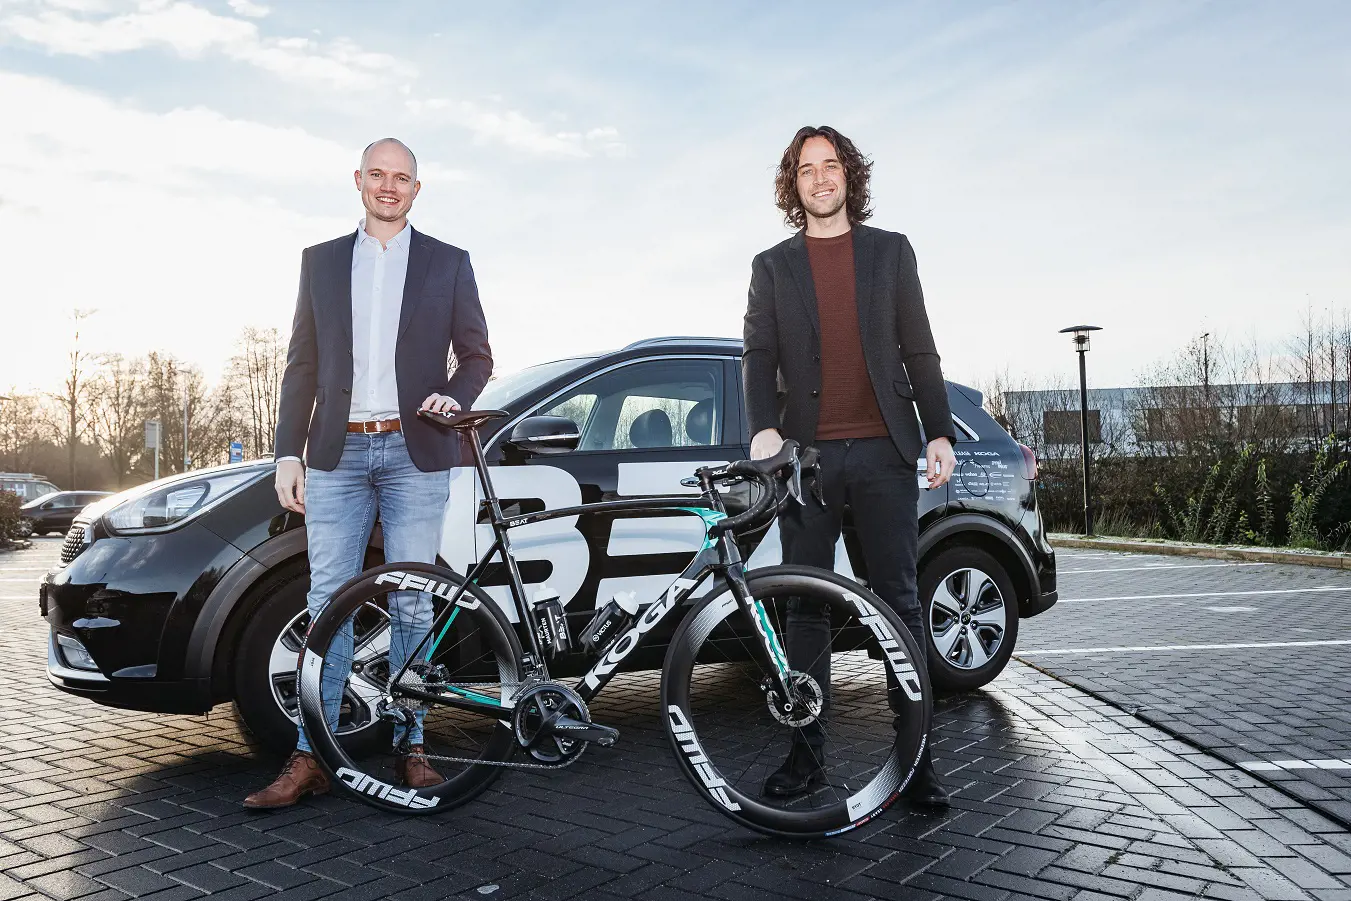 Geert Broekhuizen (BEAT) and Lars Smit (Buckaroo) confirm partnership in cycling and payments